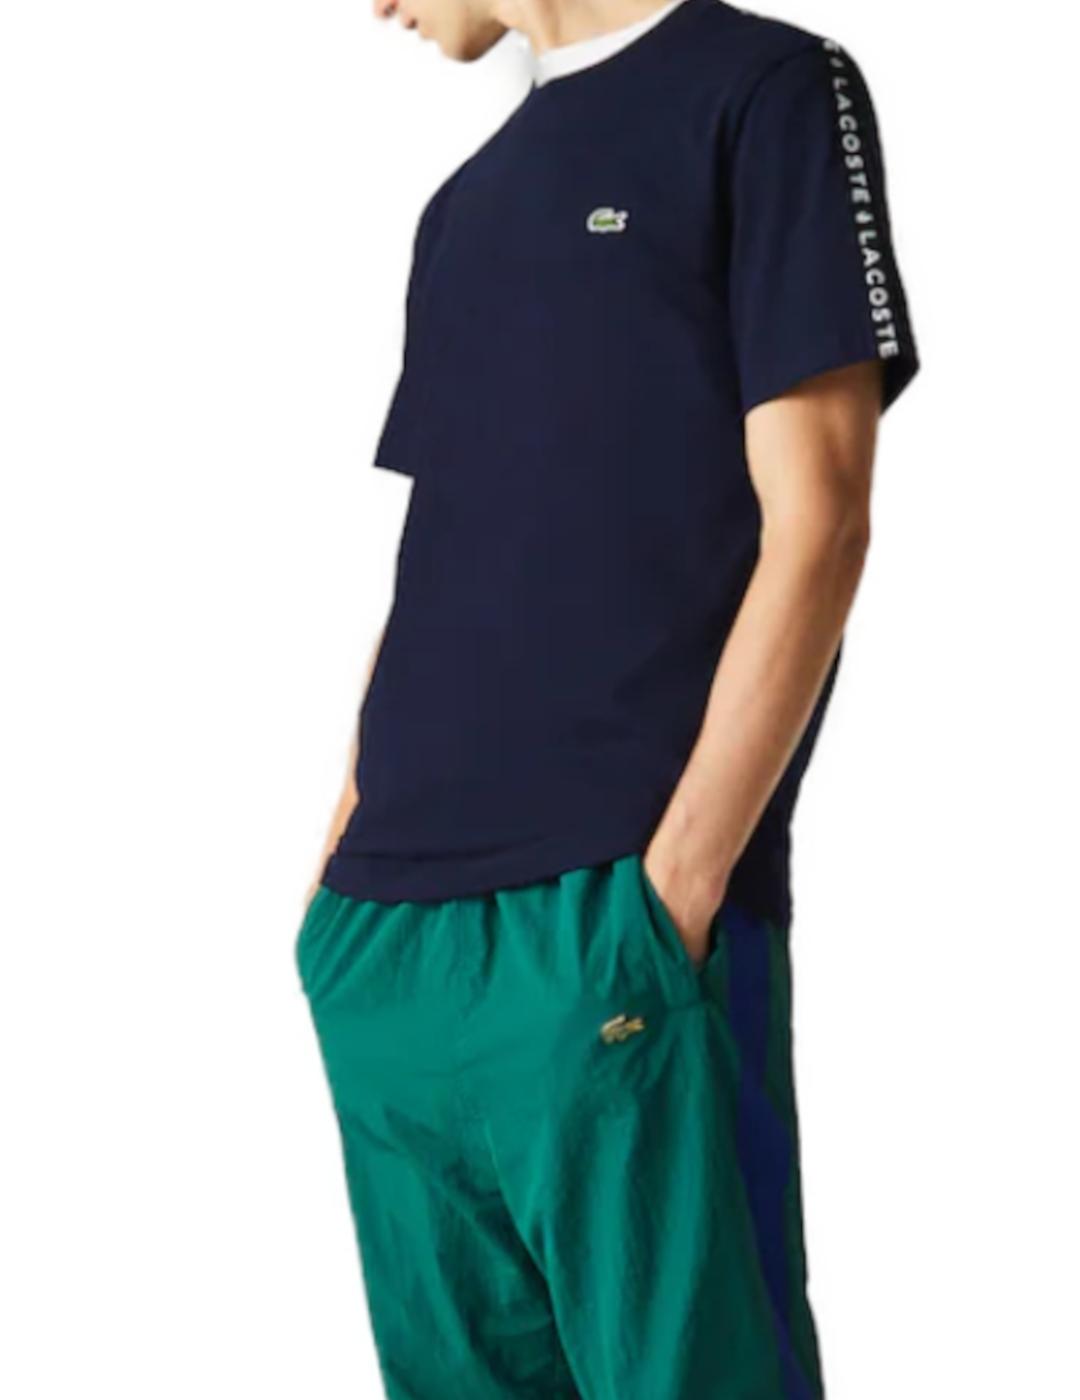 Camiseta Lacoste marino con franja para hombre- z